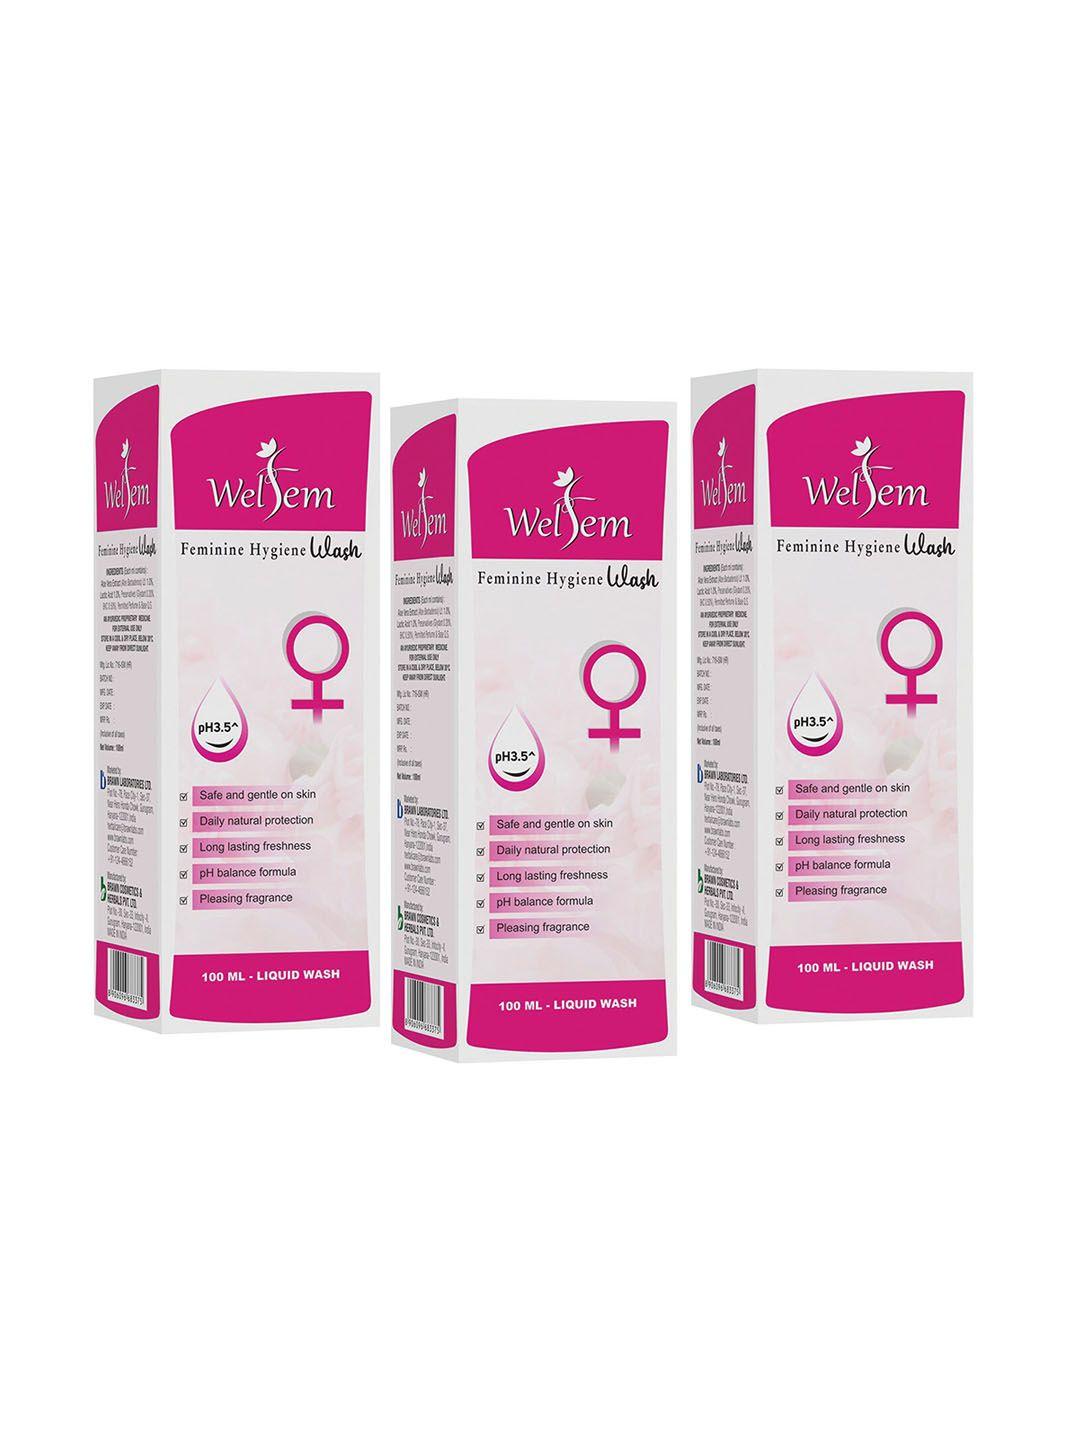 welfem set of 3 ph3.5 feminine hygiene wash with lactic acid & aloevera - 100 ml each